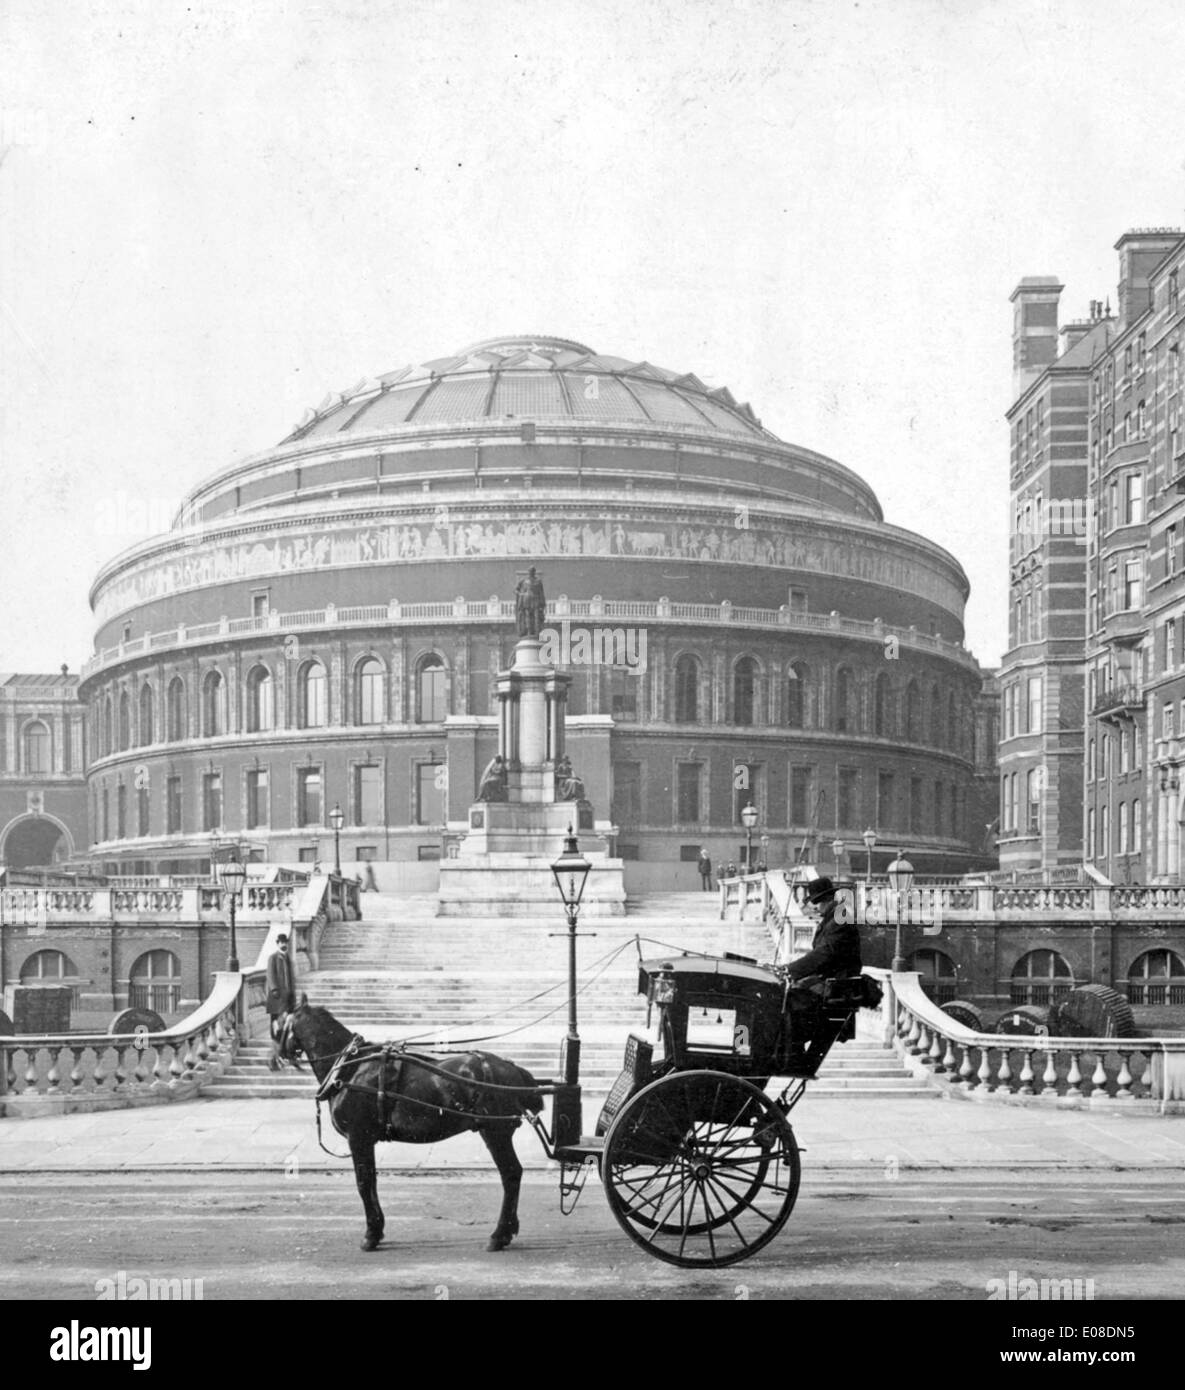 Historischen Albert Hall und Hansom Cab, London, England, UK Stockfoto